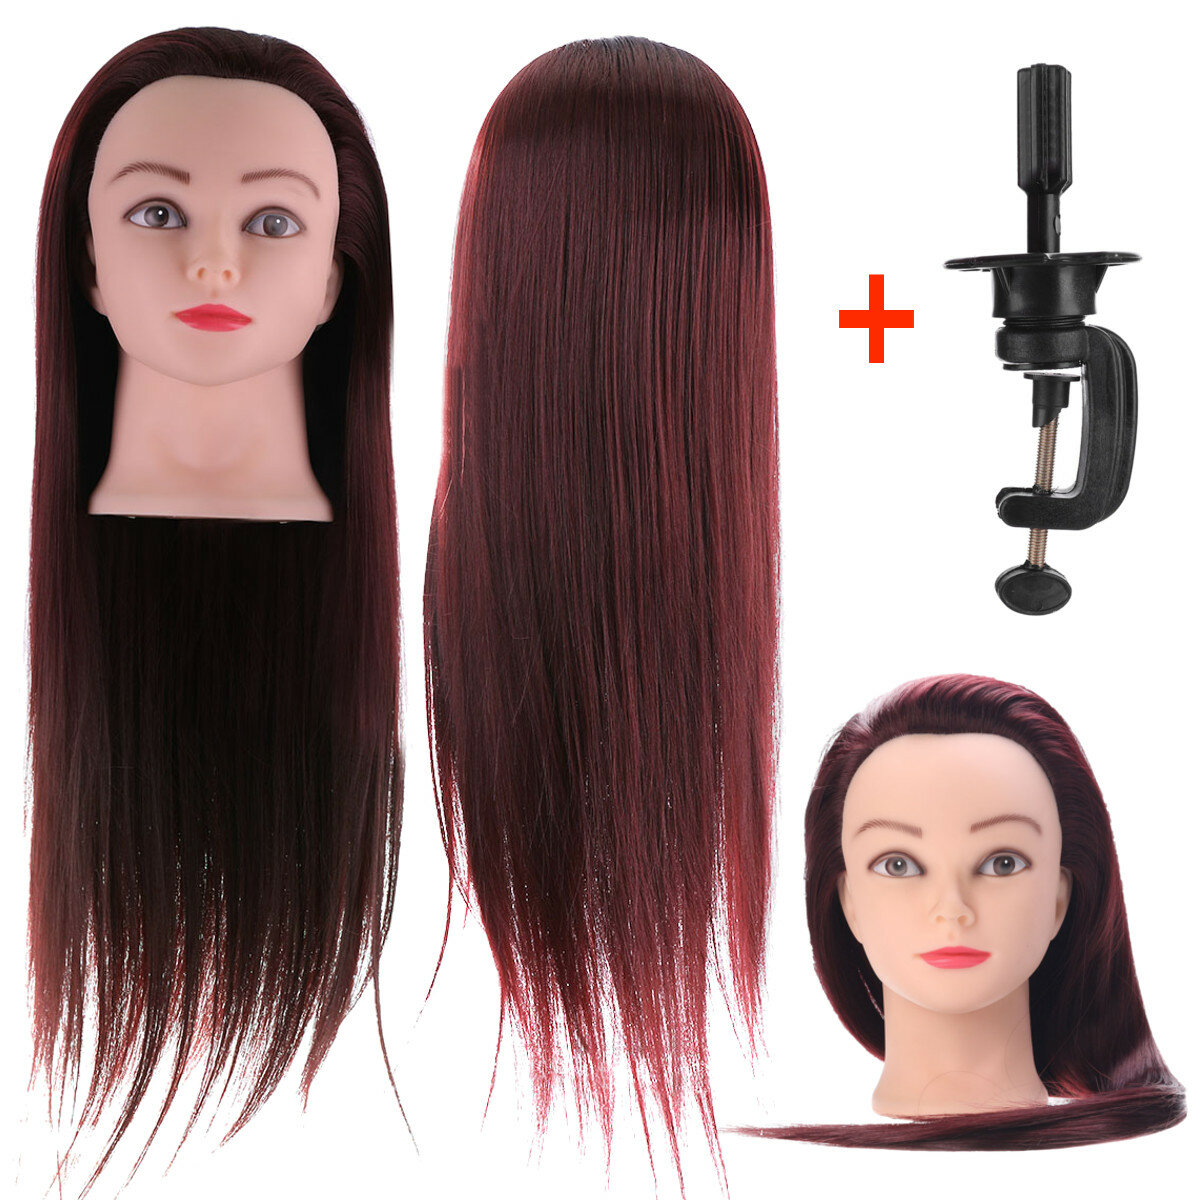 23 "Hair Beauty Salon Hair Training Head Models Human Body Model